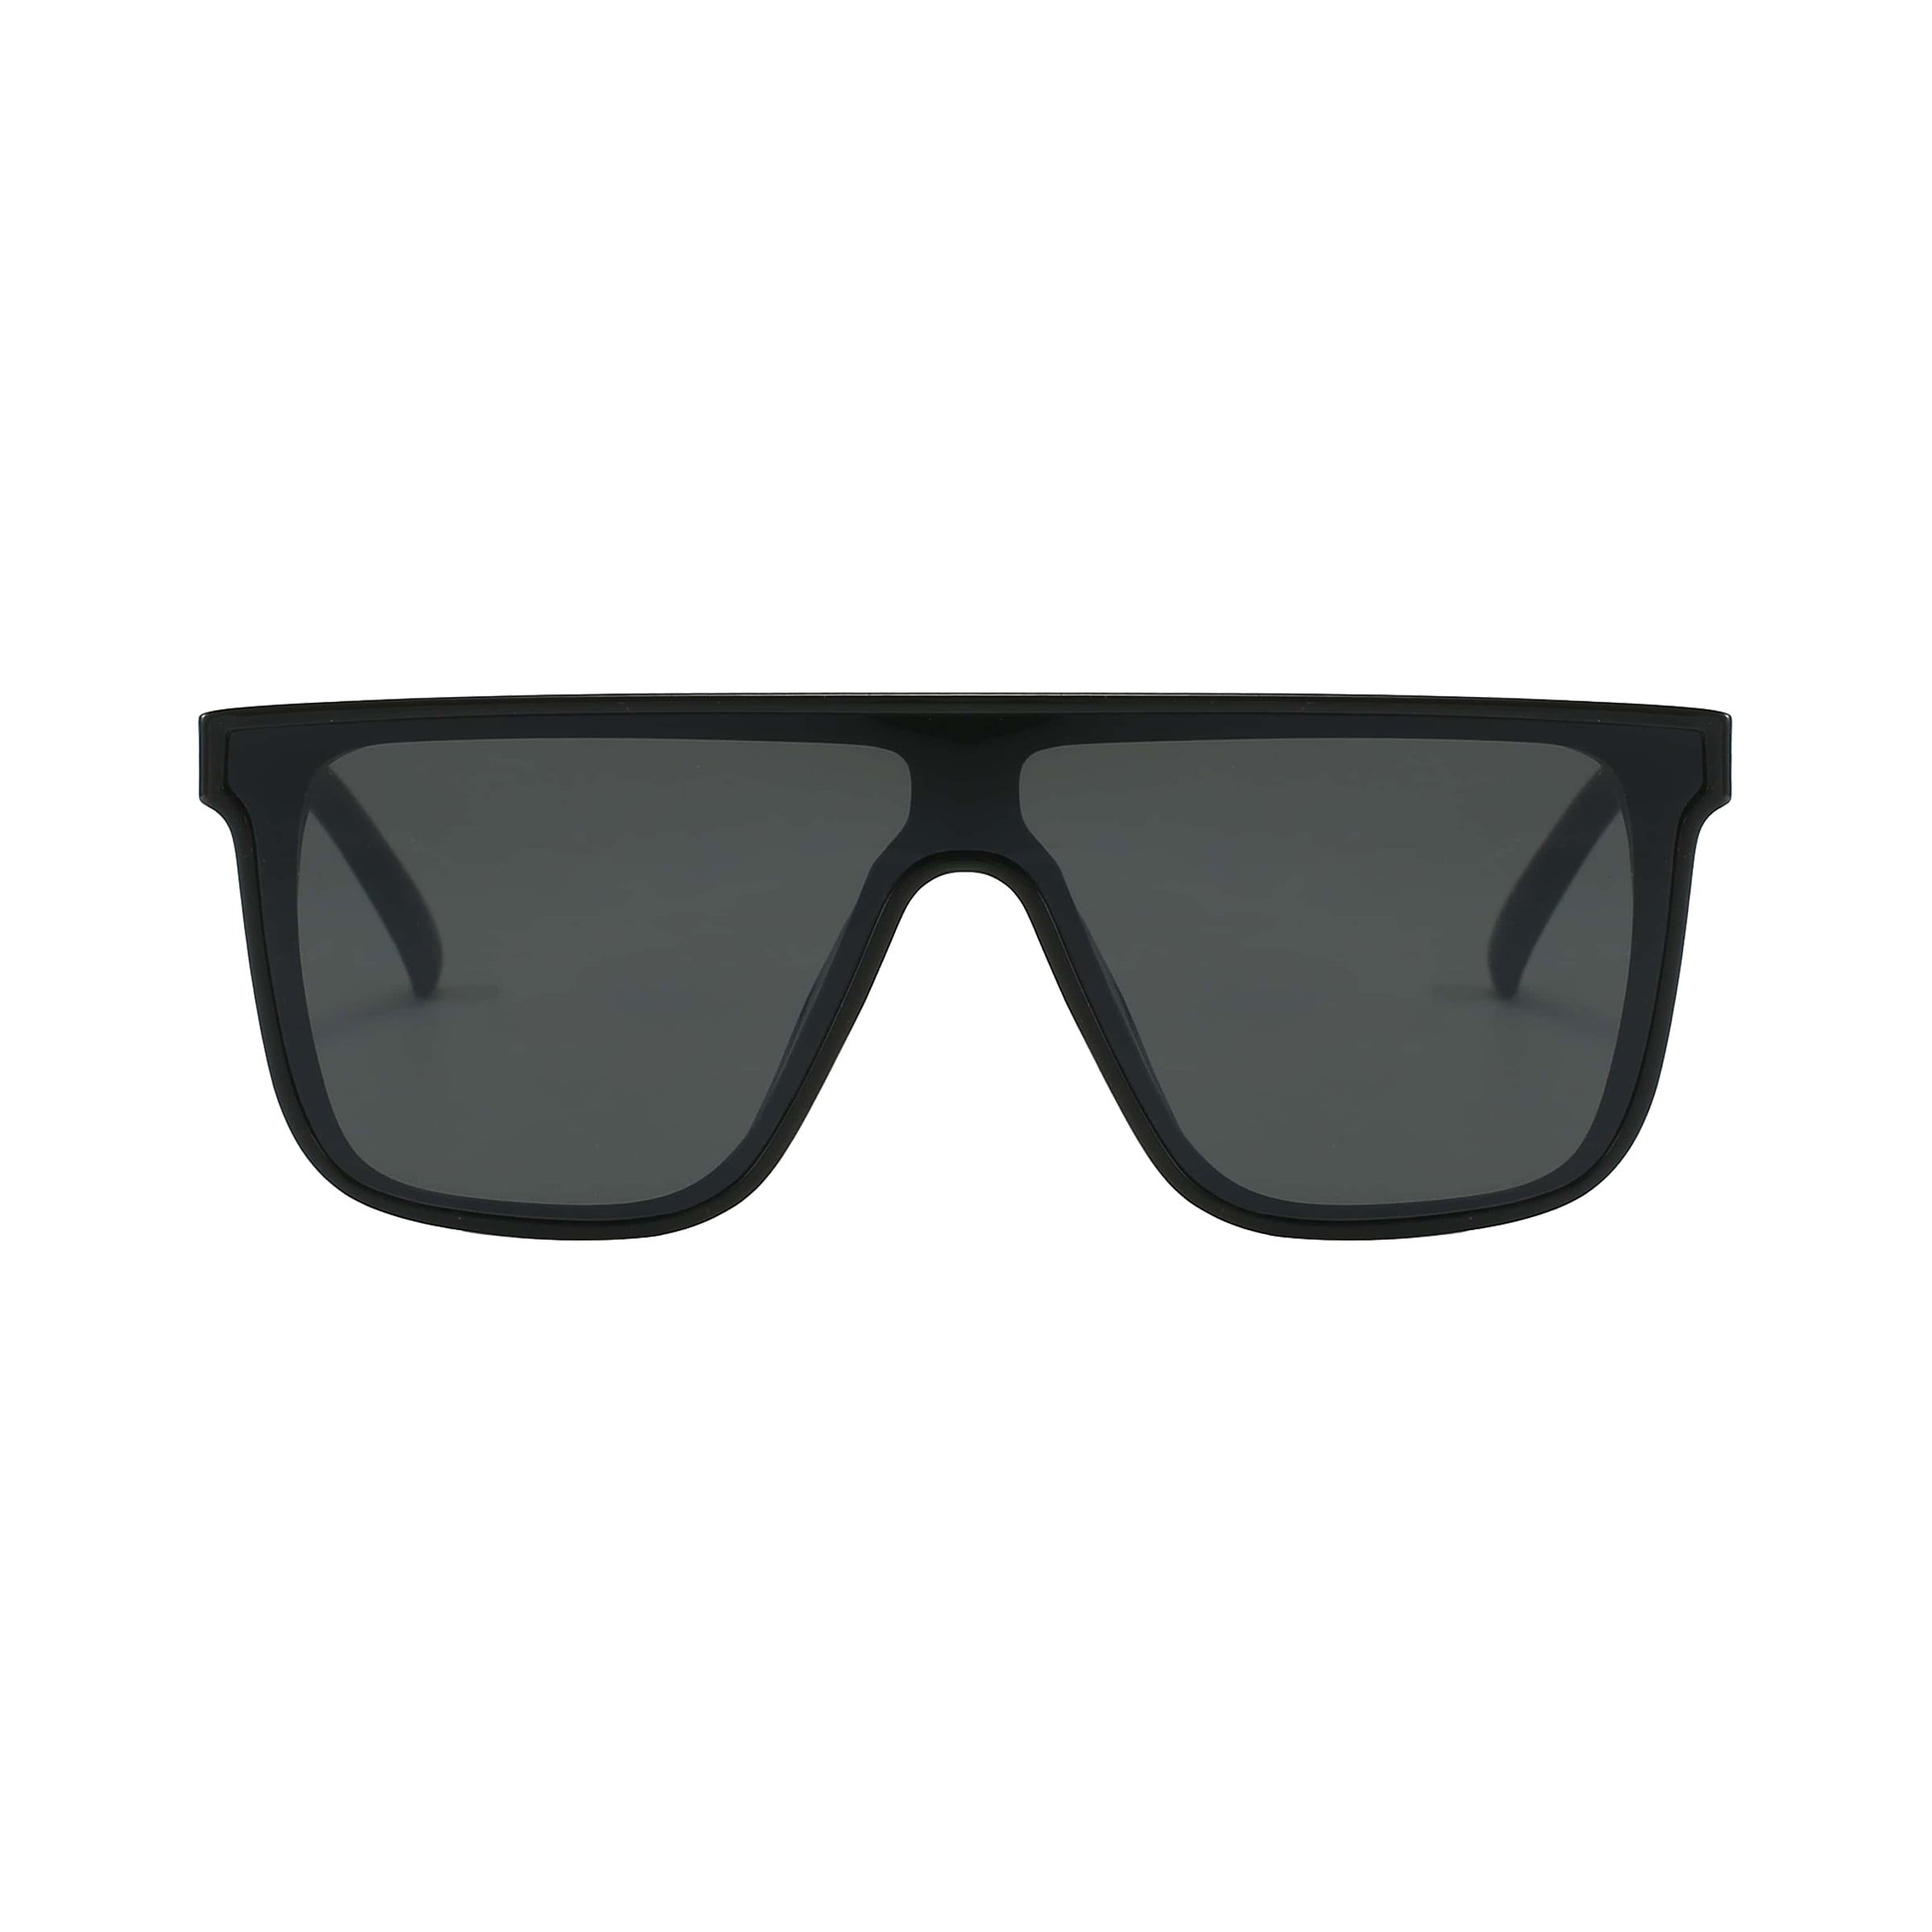 Piranha Eyewear Liam Black Flat Top Unisex Sunglasses with Shield